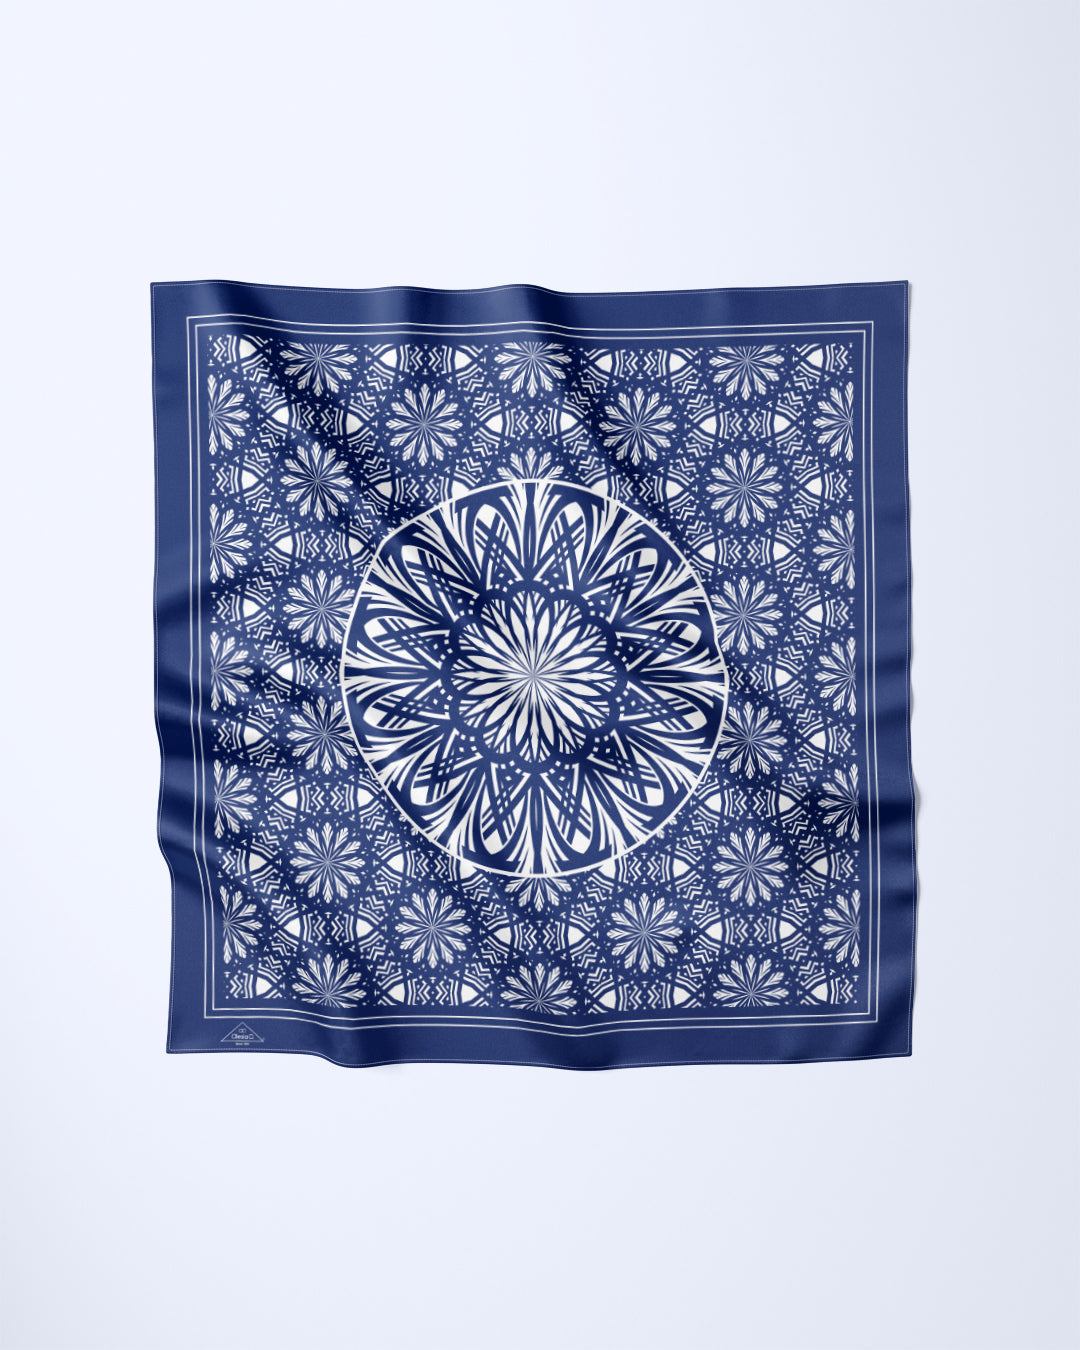 NAVY BLUE WHITE SERENITY Mandala Designer Silk Scarf by Alesia Chaika